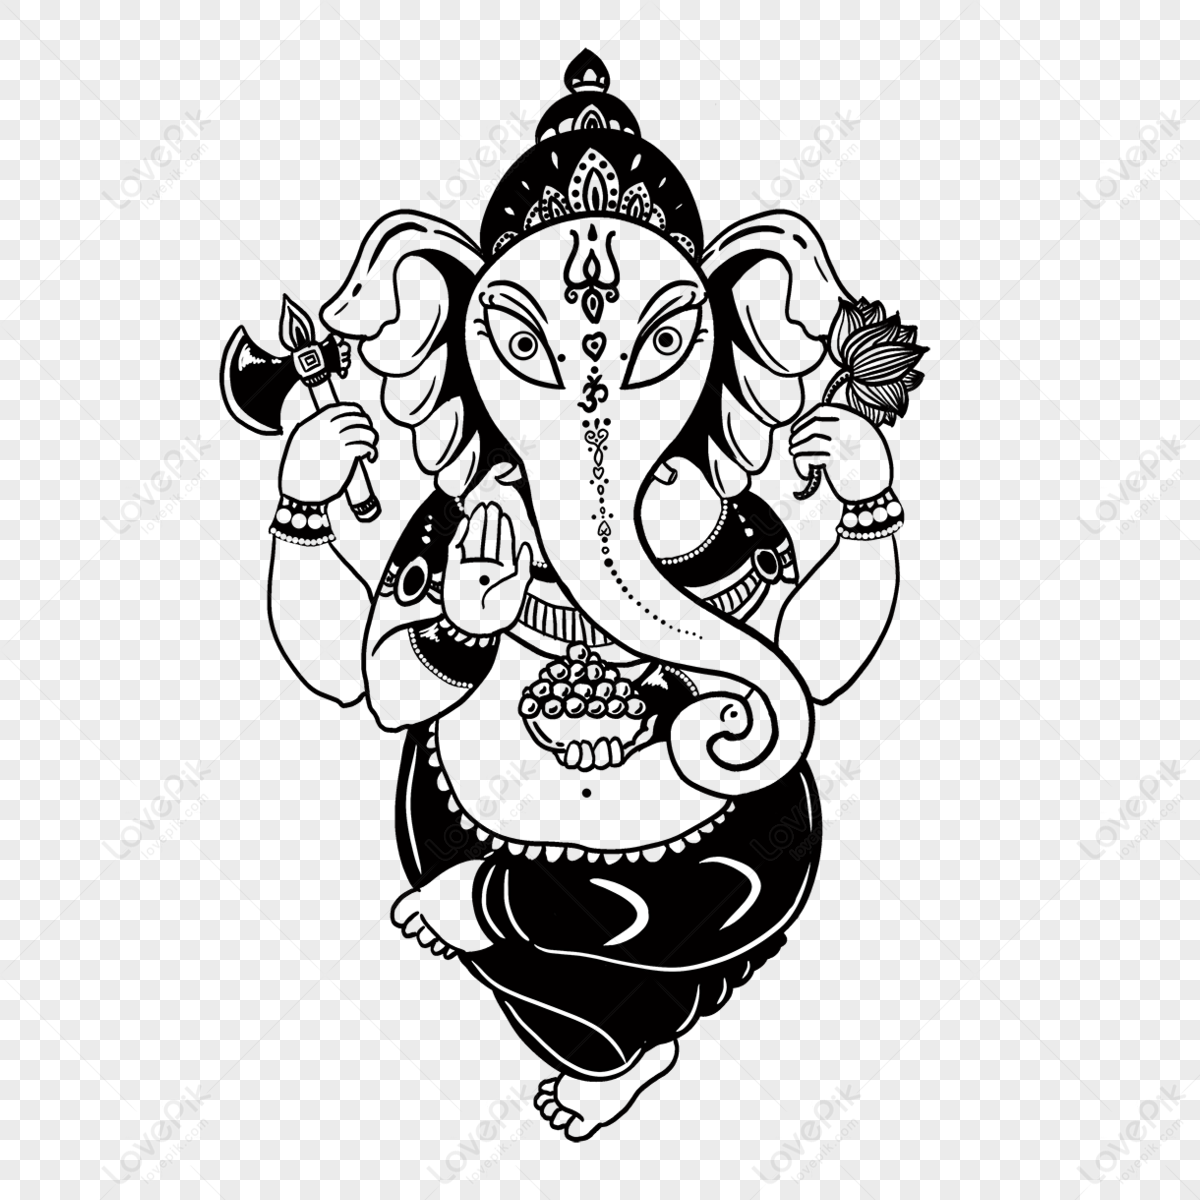 Drawing Cartoon Indian Ganesh Chaturthi Elephant Illustration PNG Images |  EPS Free Download - Pikbest